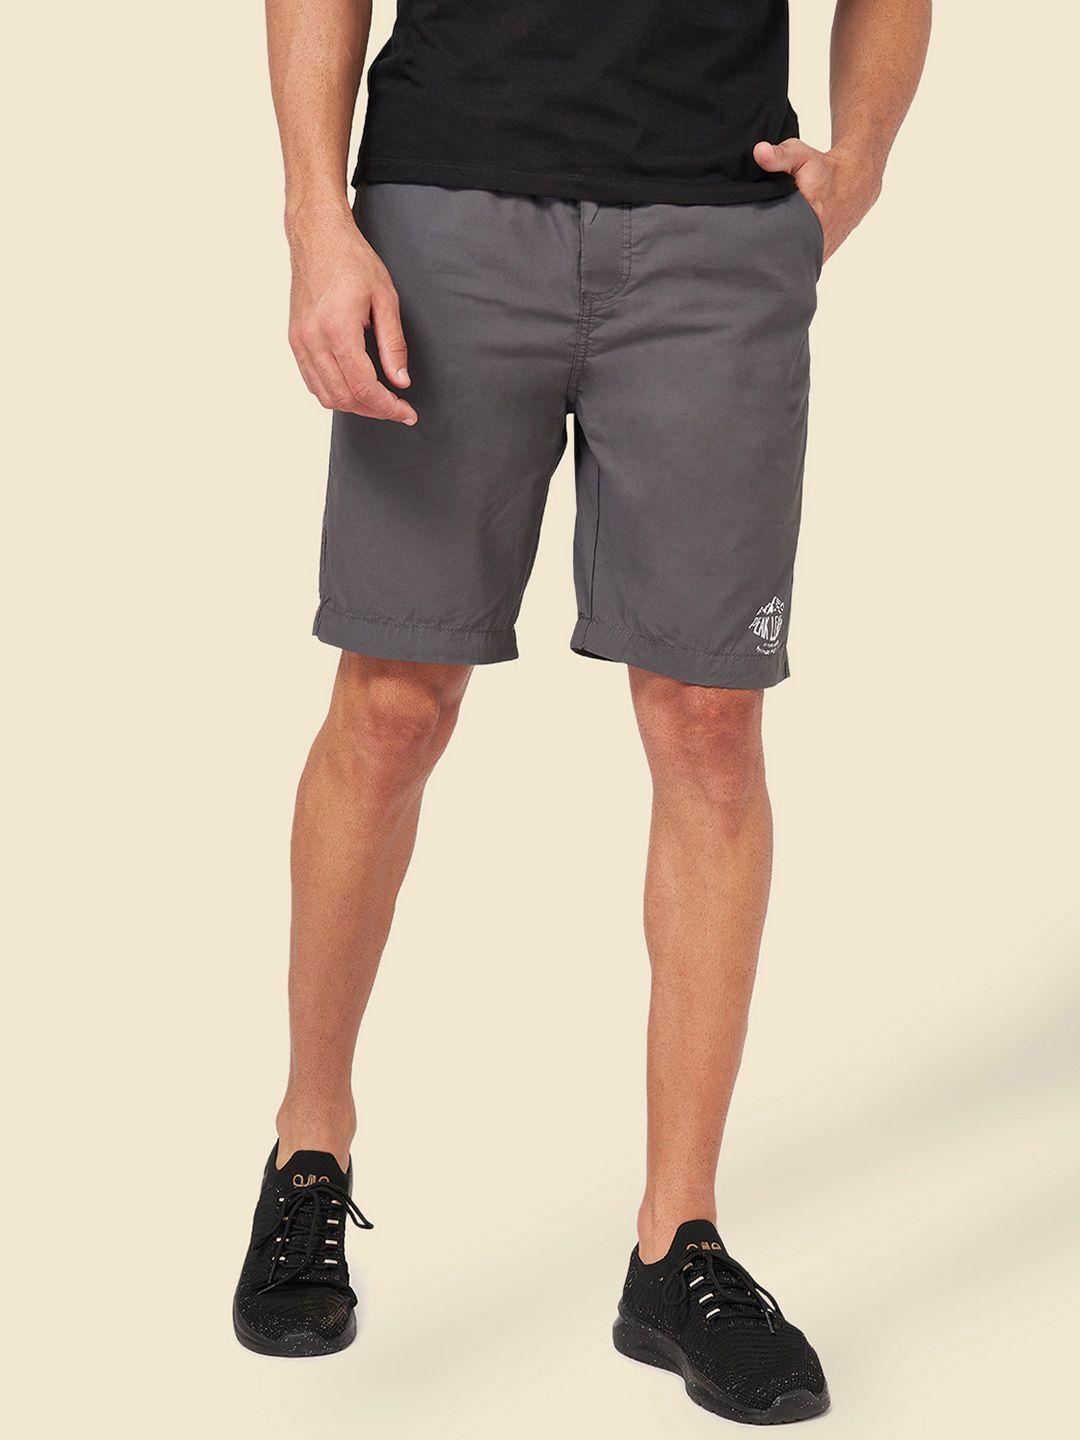 urban ranger by pantaloons men mid-rise slim fit cotton shorts